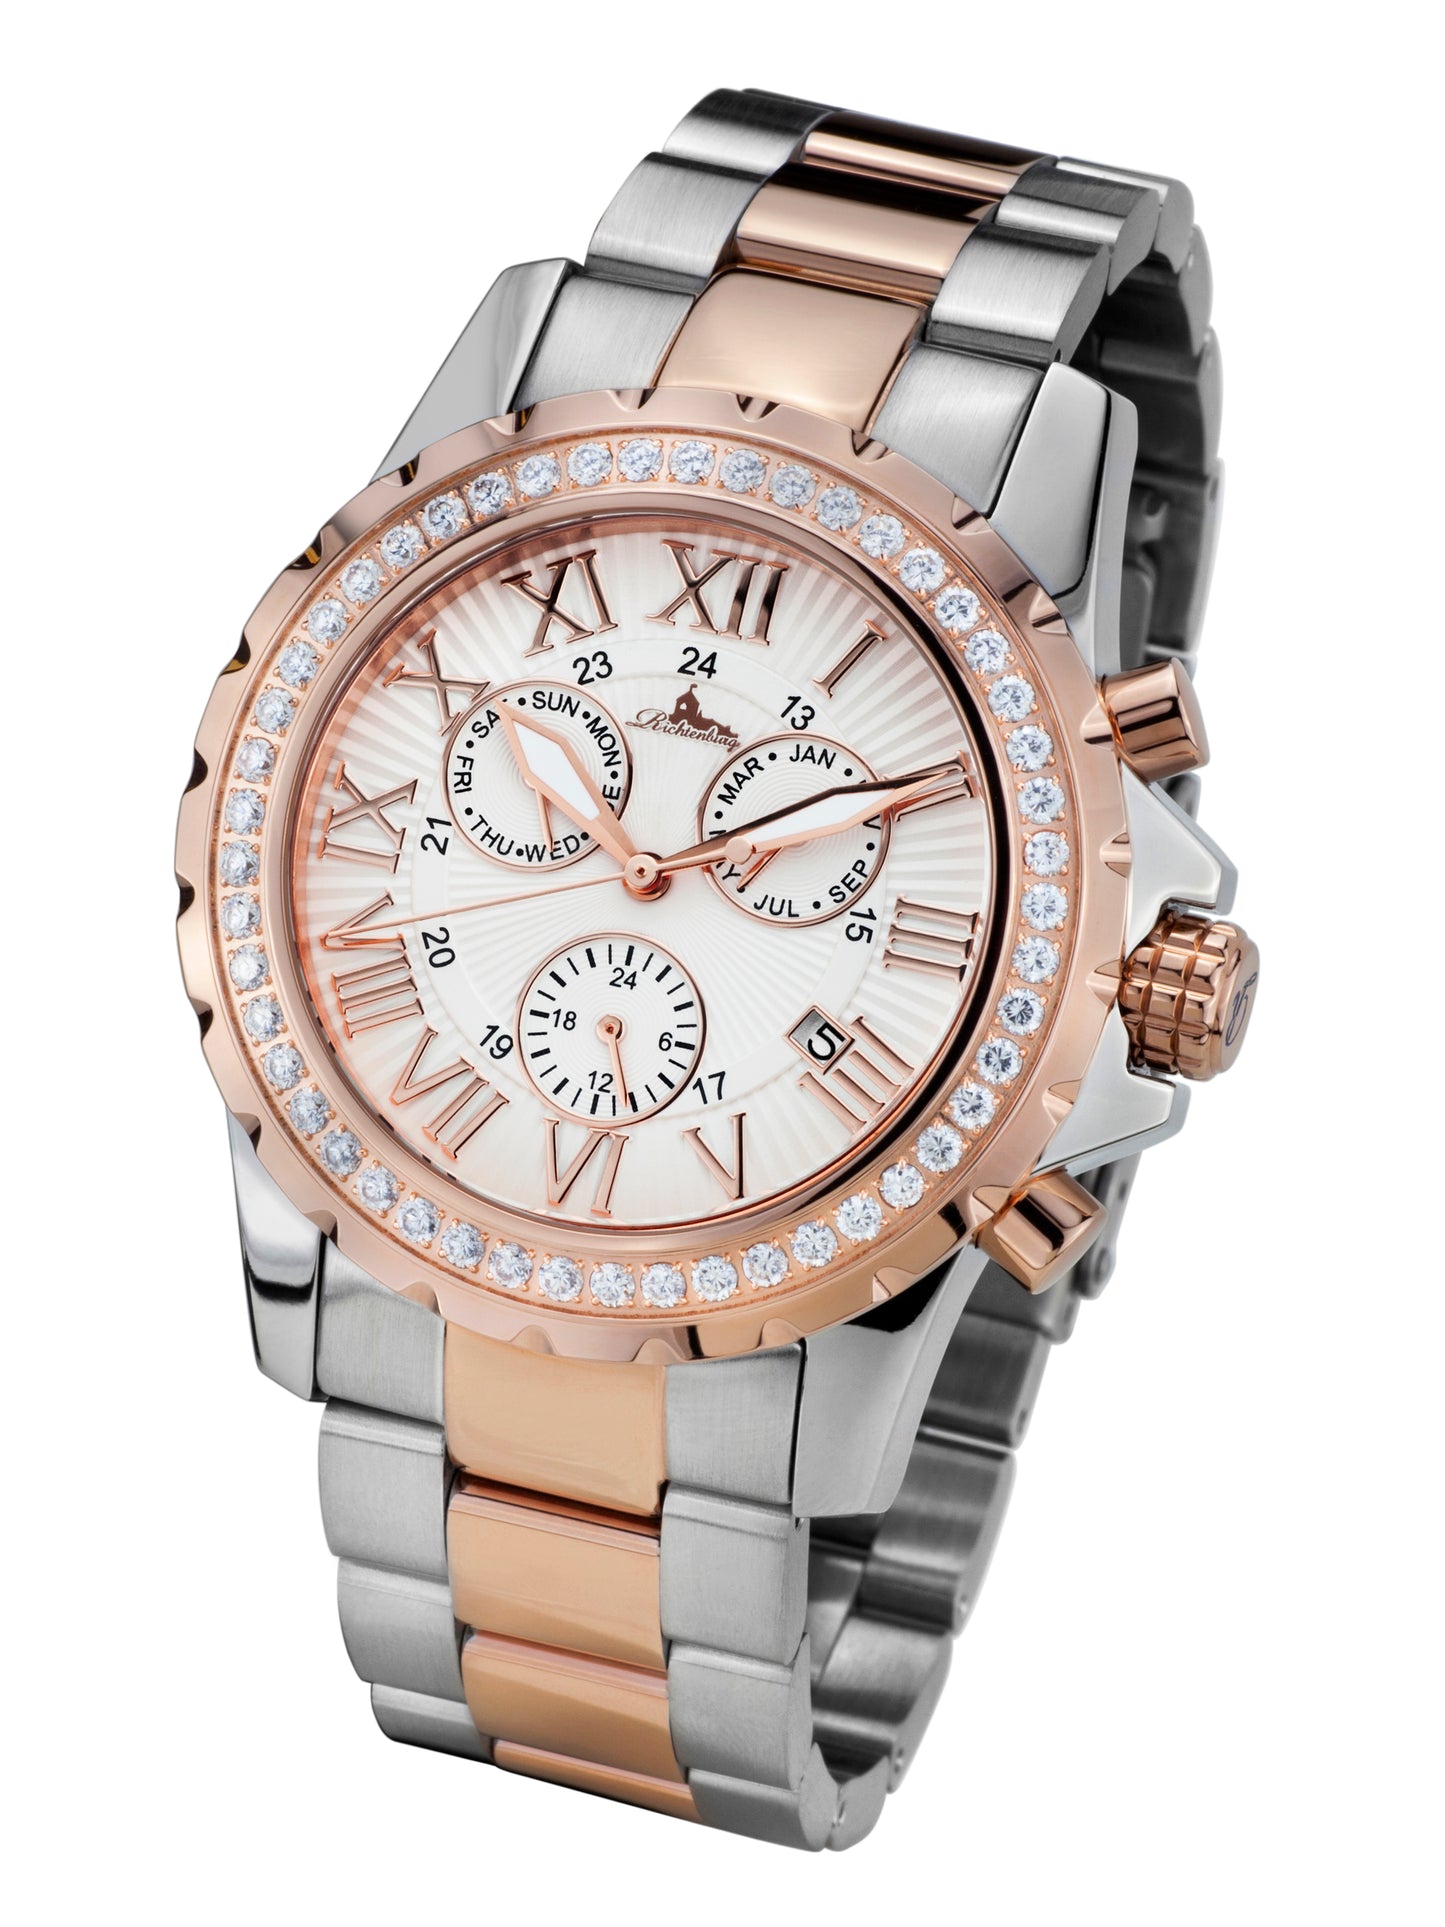 Automatic watches — Romantica — Richtenburg — rosegold IP silver two-tone steel